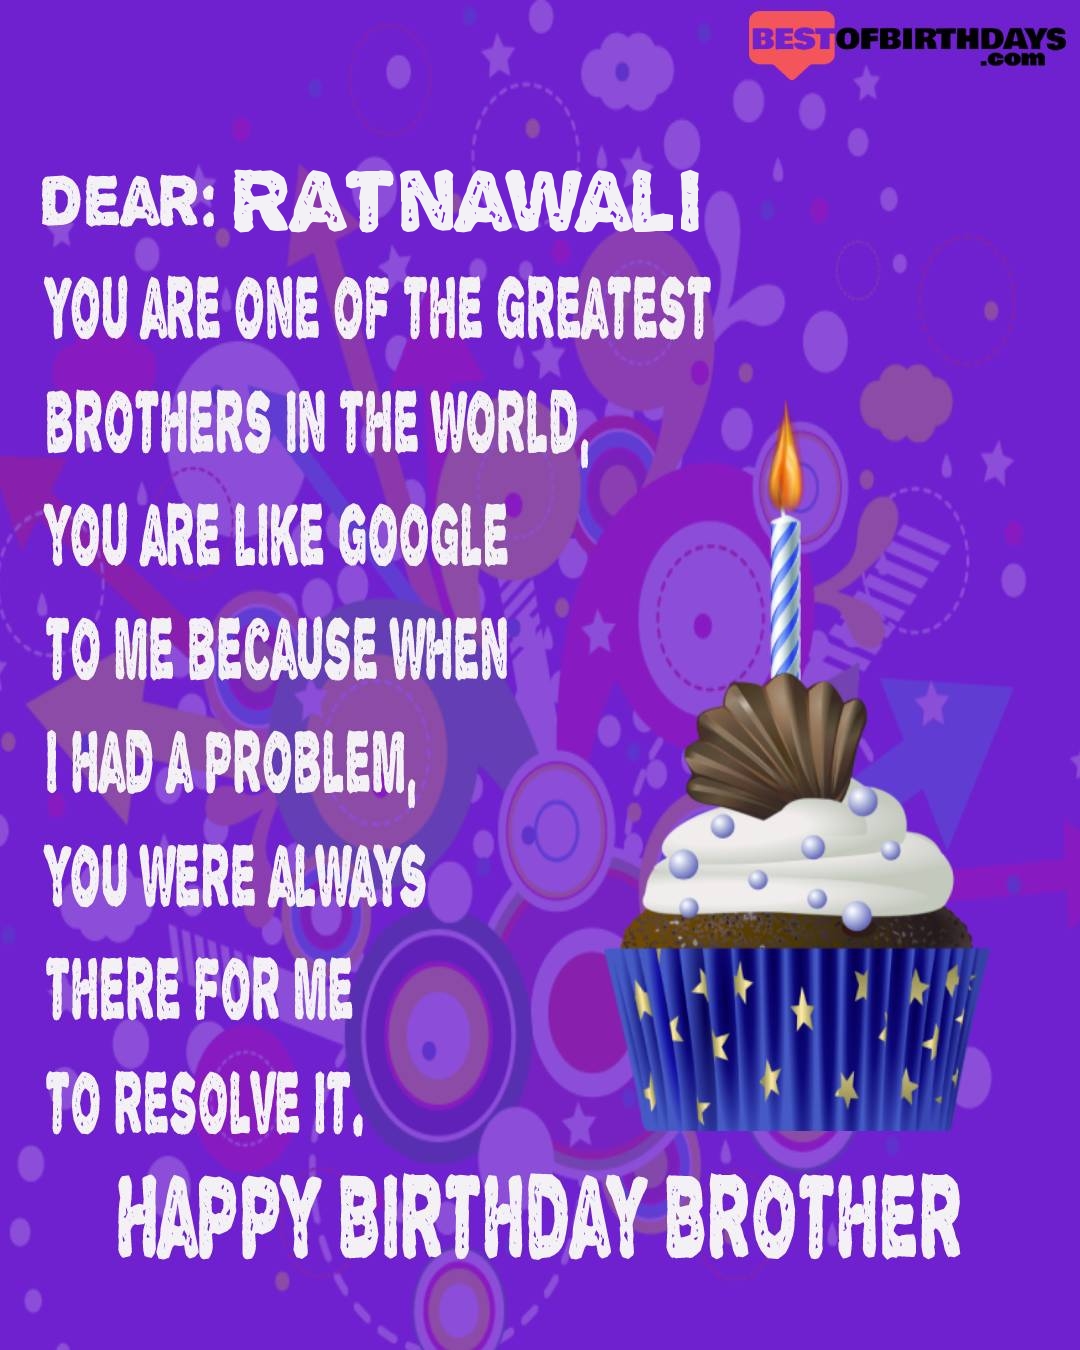 Happy birthday ratnawali bhai brother bro